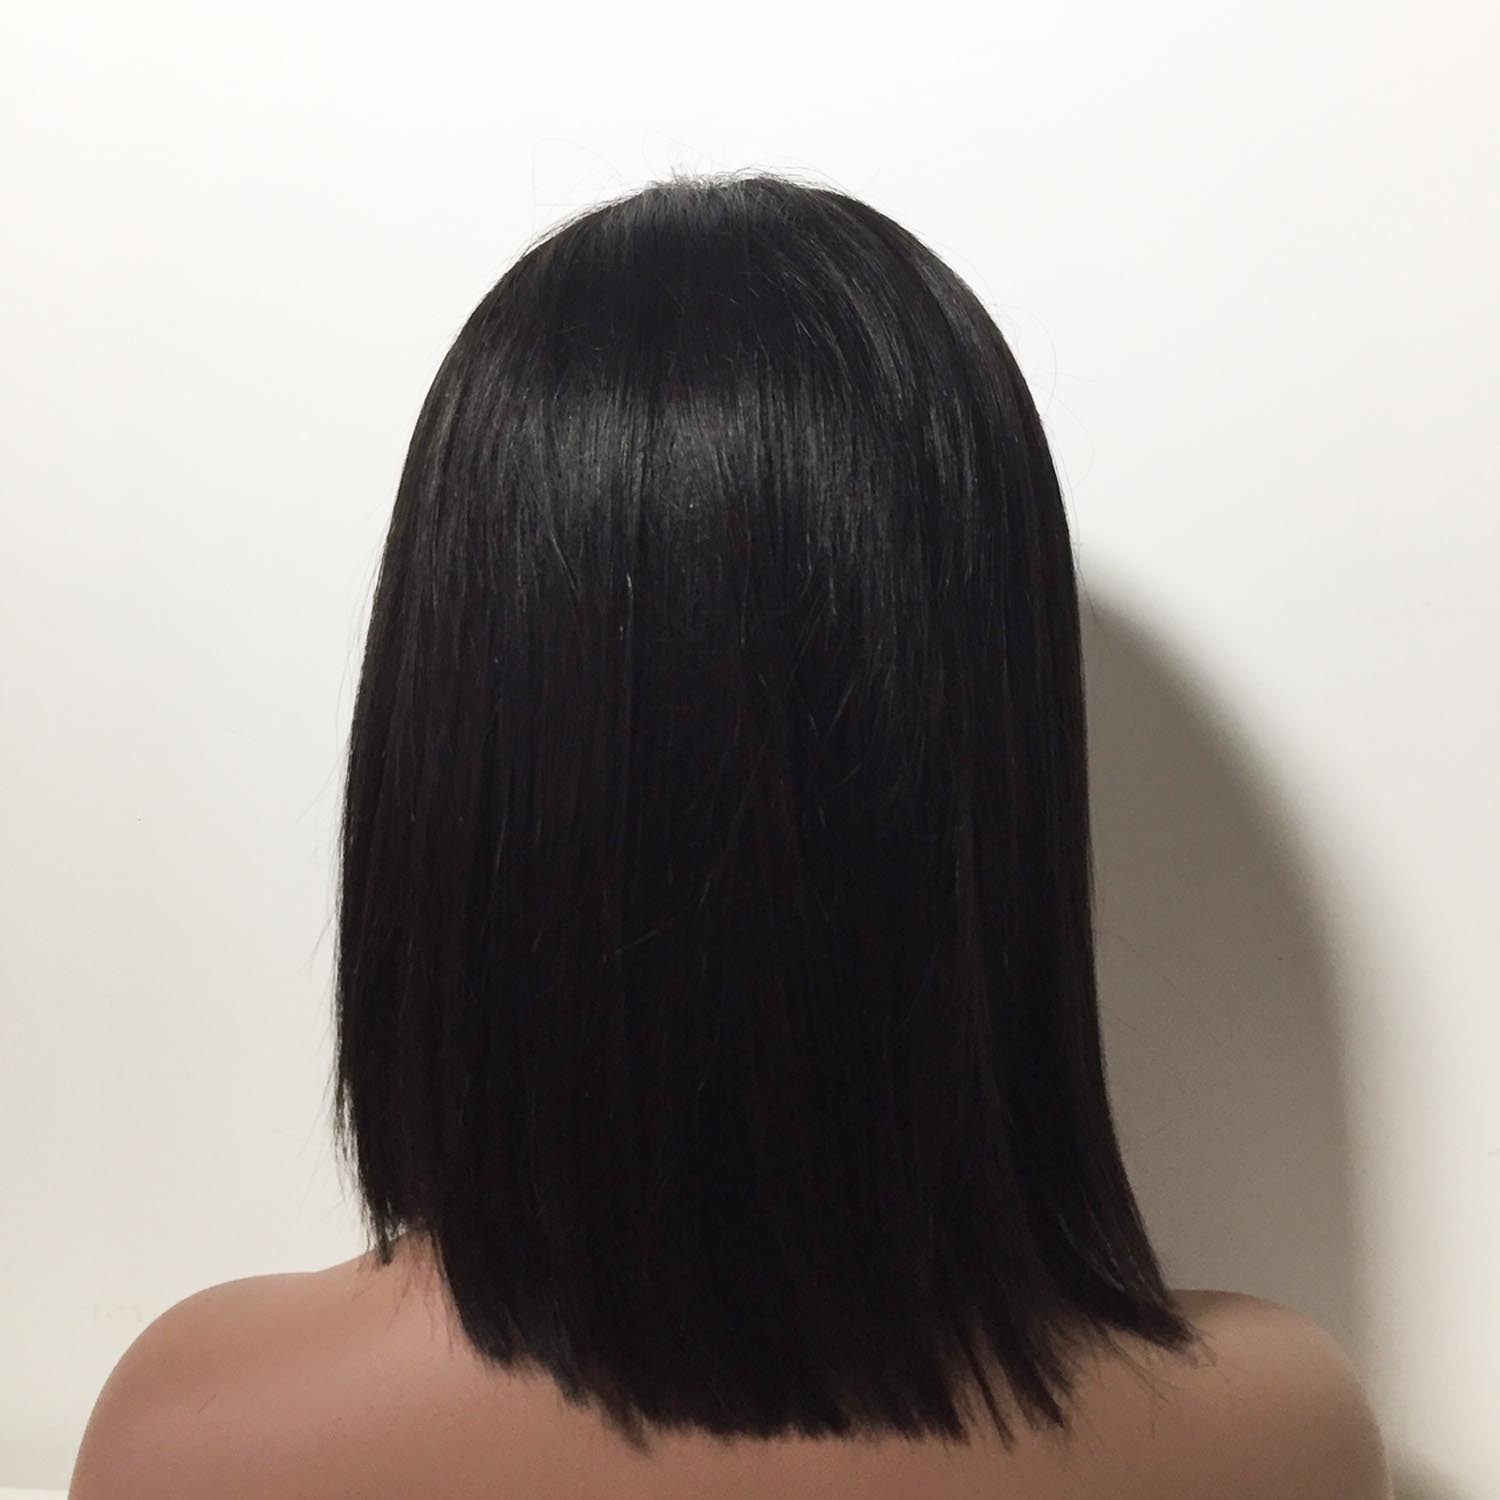 nevermindyrhead Women Black Human Hair Lace Front Medium Length Straight Side Part Wig